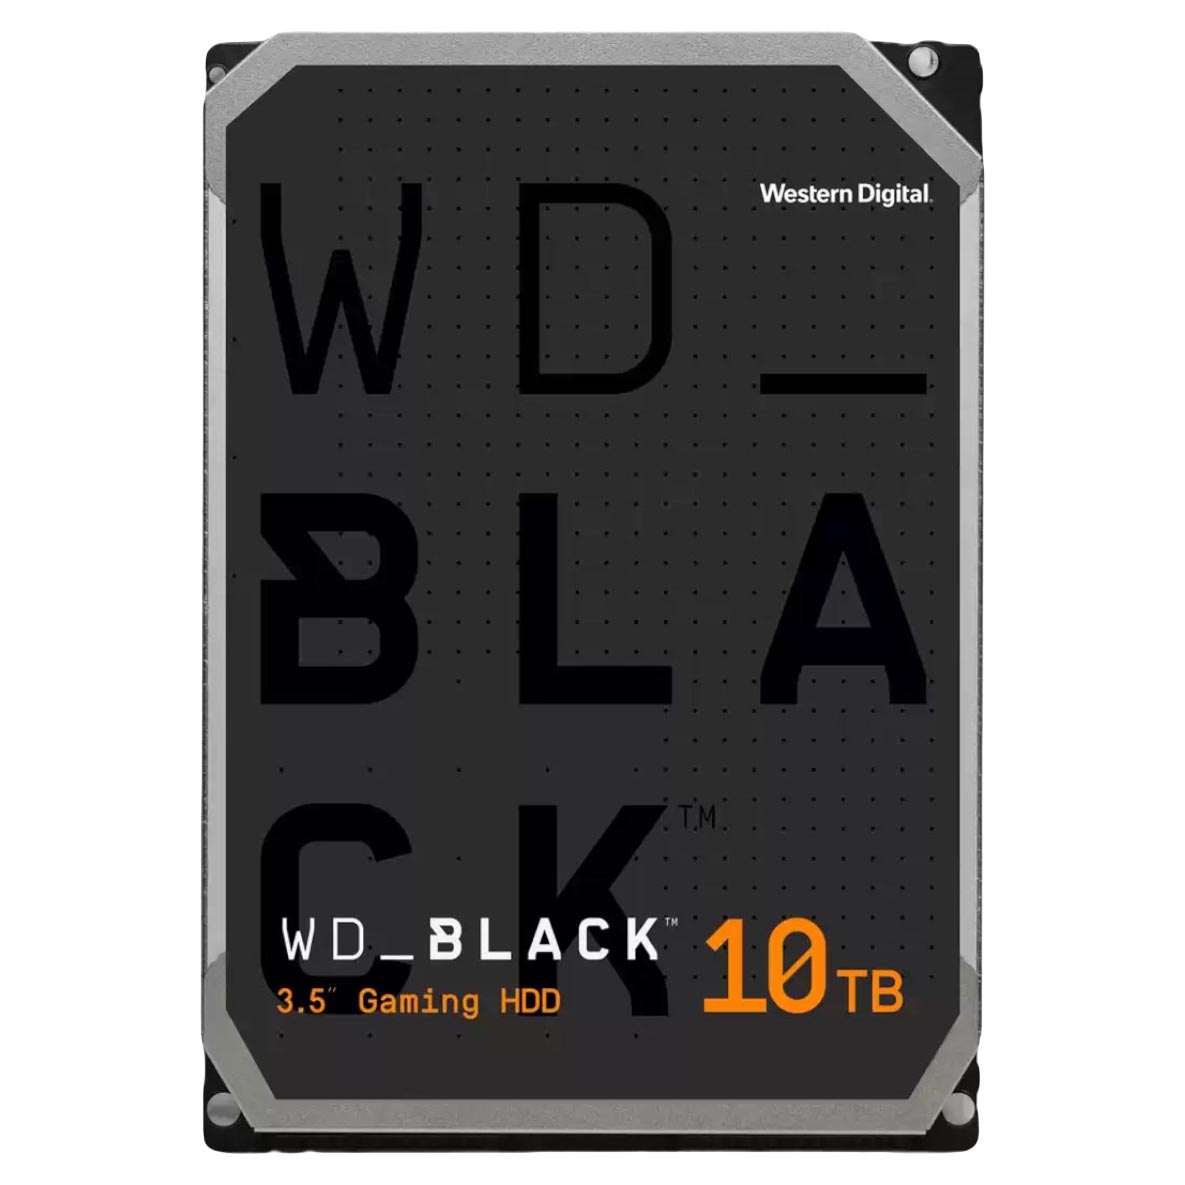 Внутренний жесткий диск Western Digital WD Black Gaming, WD101FZBX, 10 Тб внутренний жесткий диск western digital gold 3 5 8 тб wd8004fryz